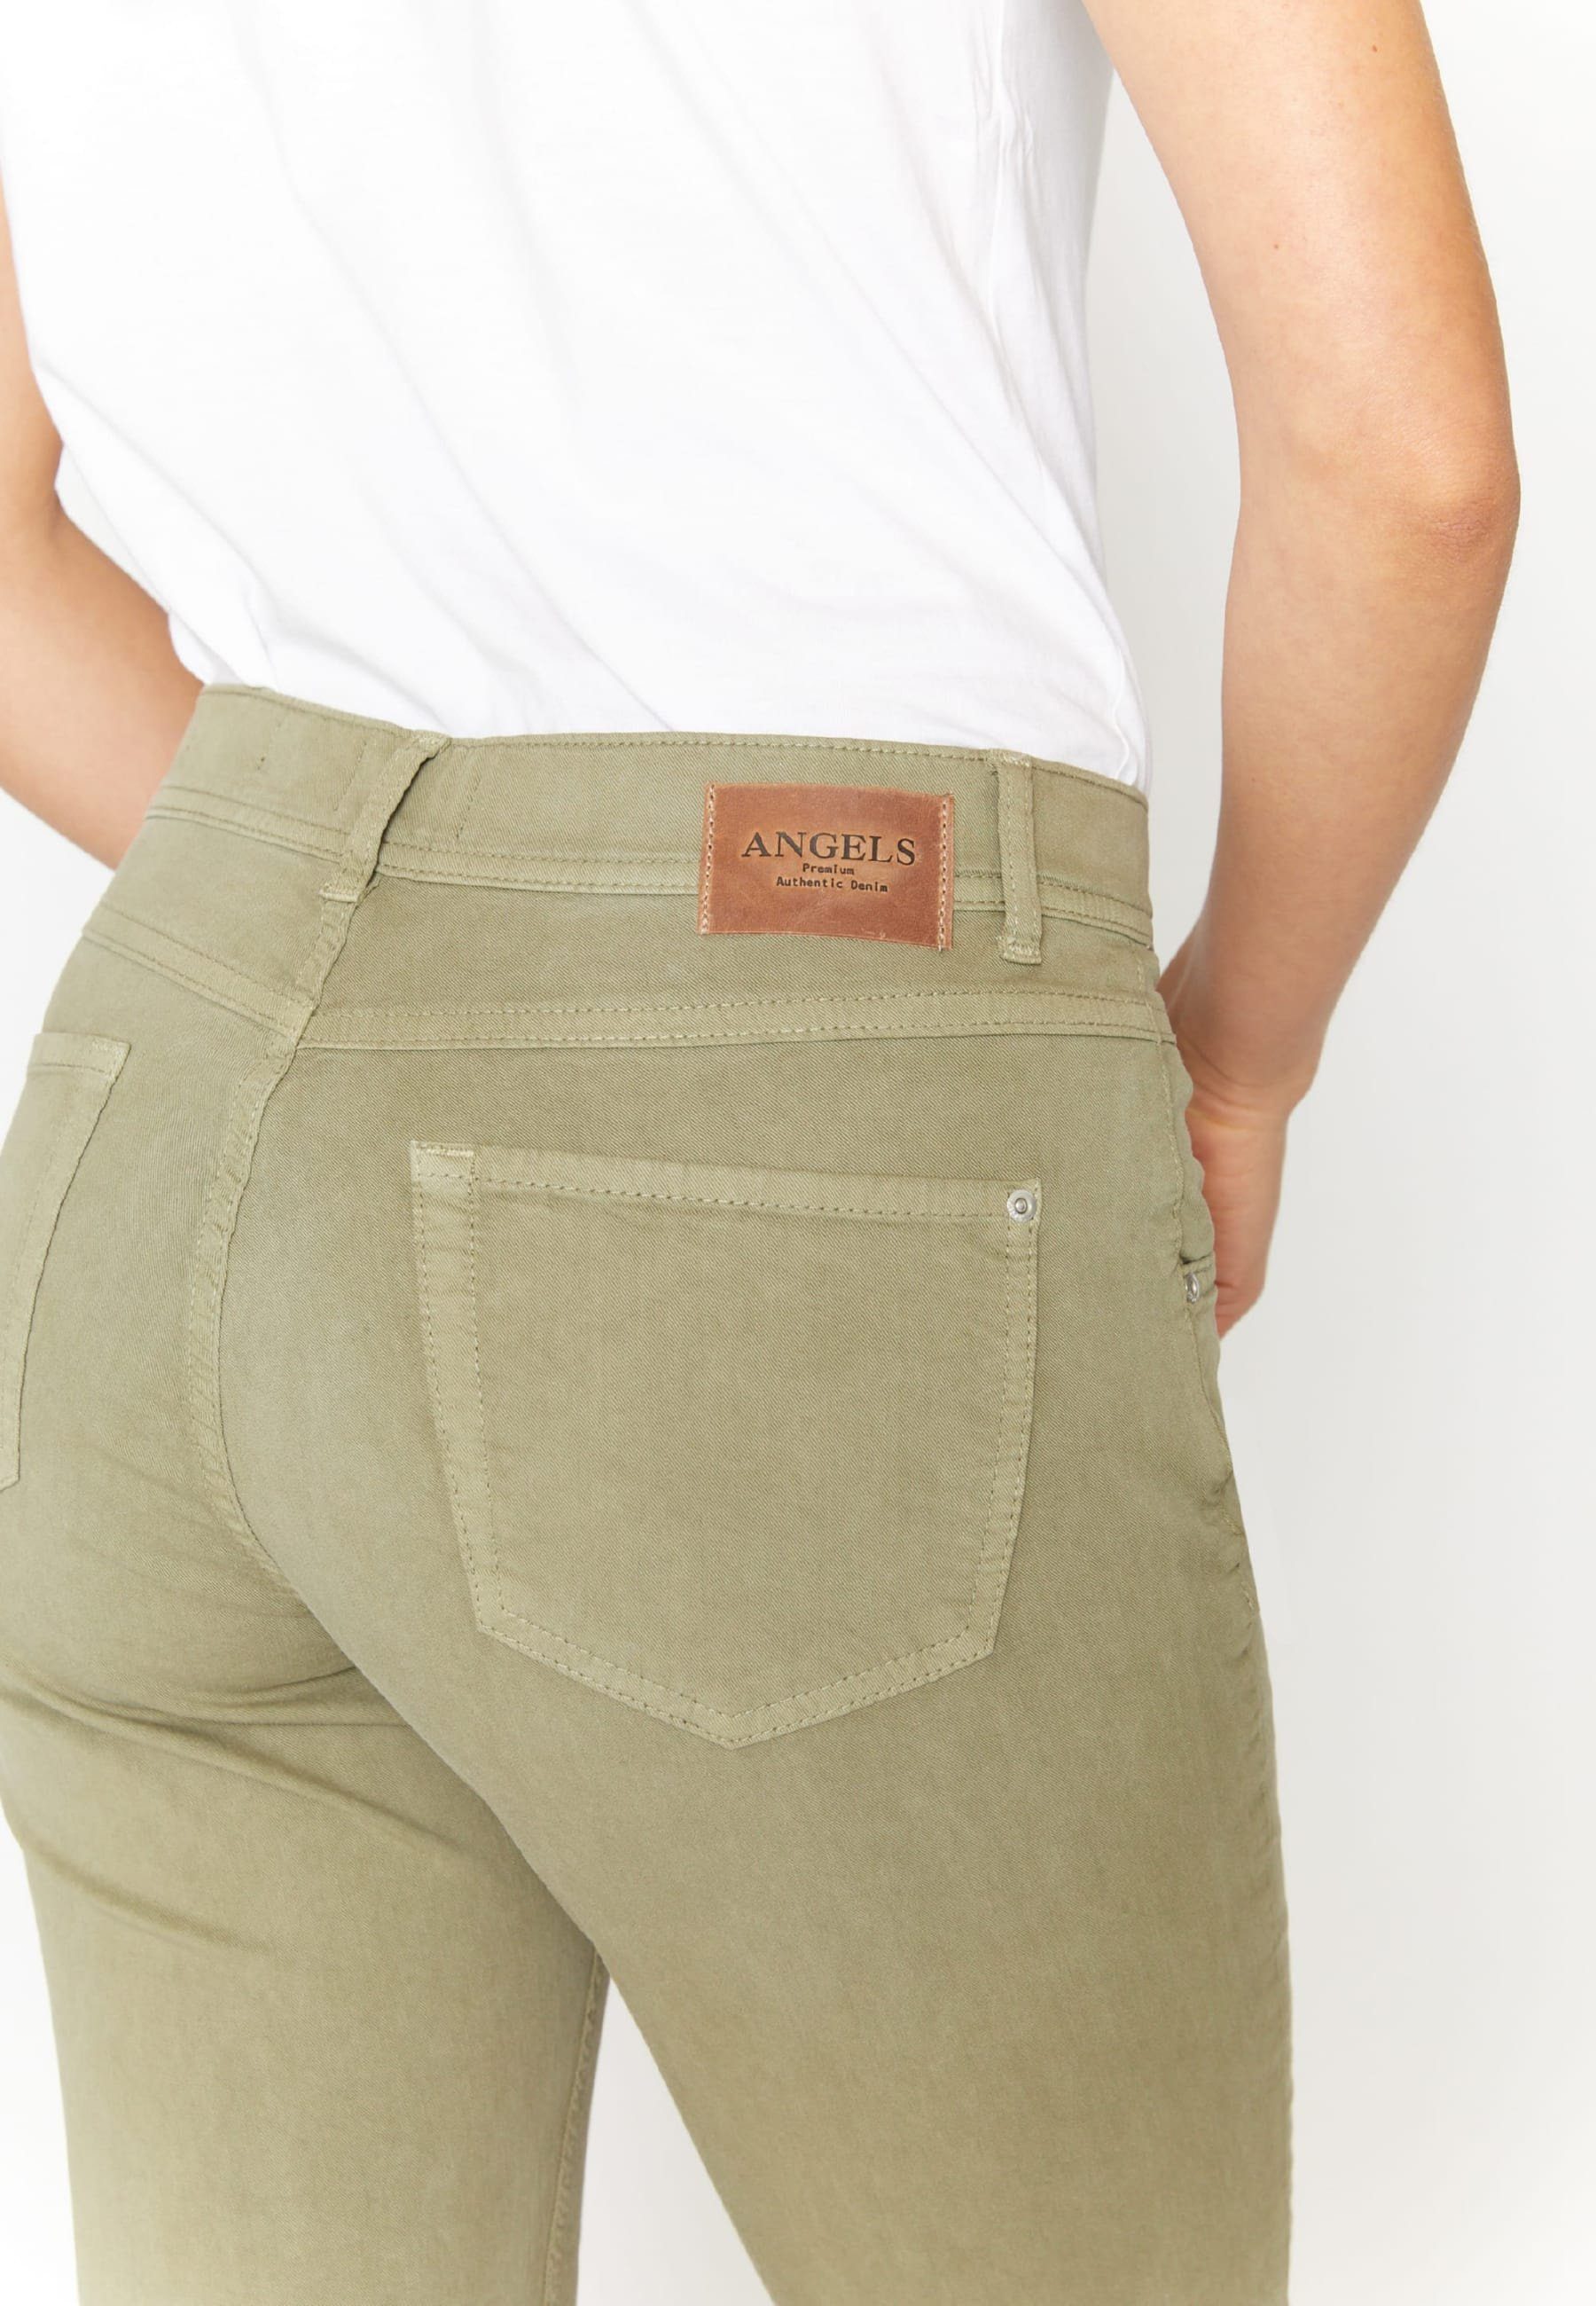 Ornella Stoff 7/8-Jeans unifarbenem Jeans Label-Applikationen mit Button mit ANGELS khaki